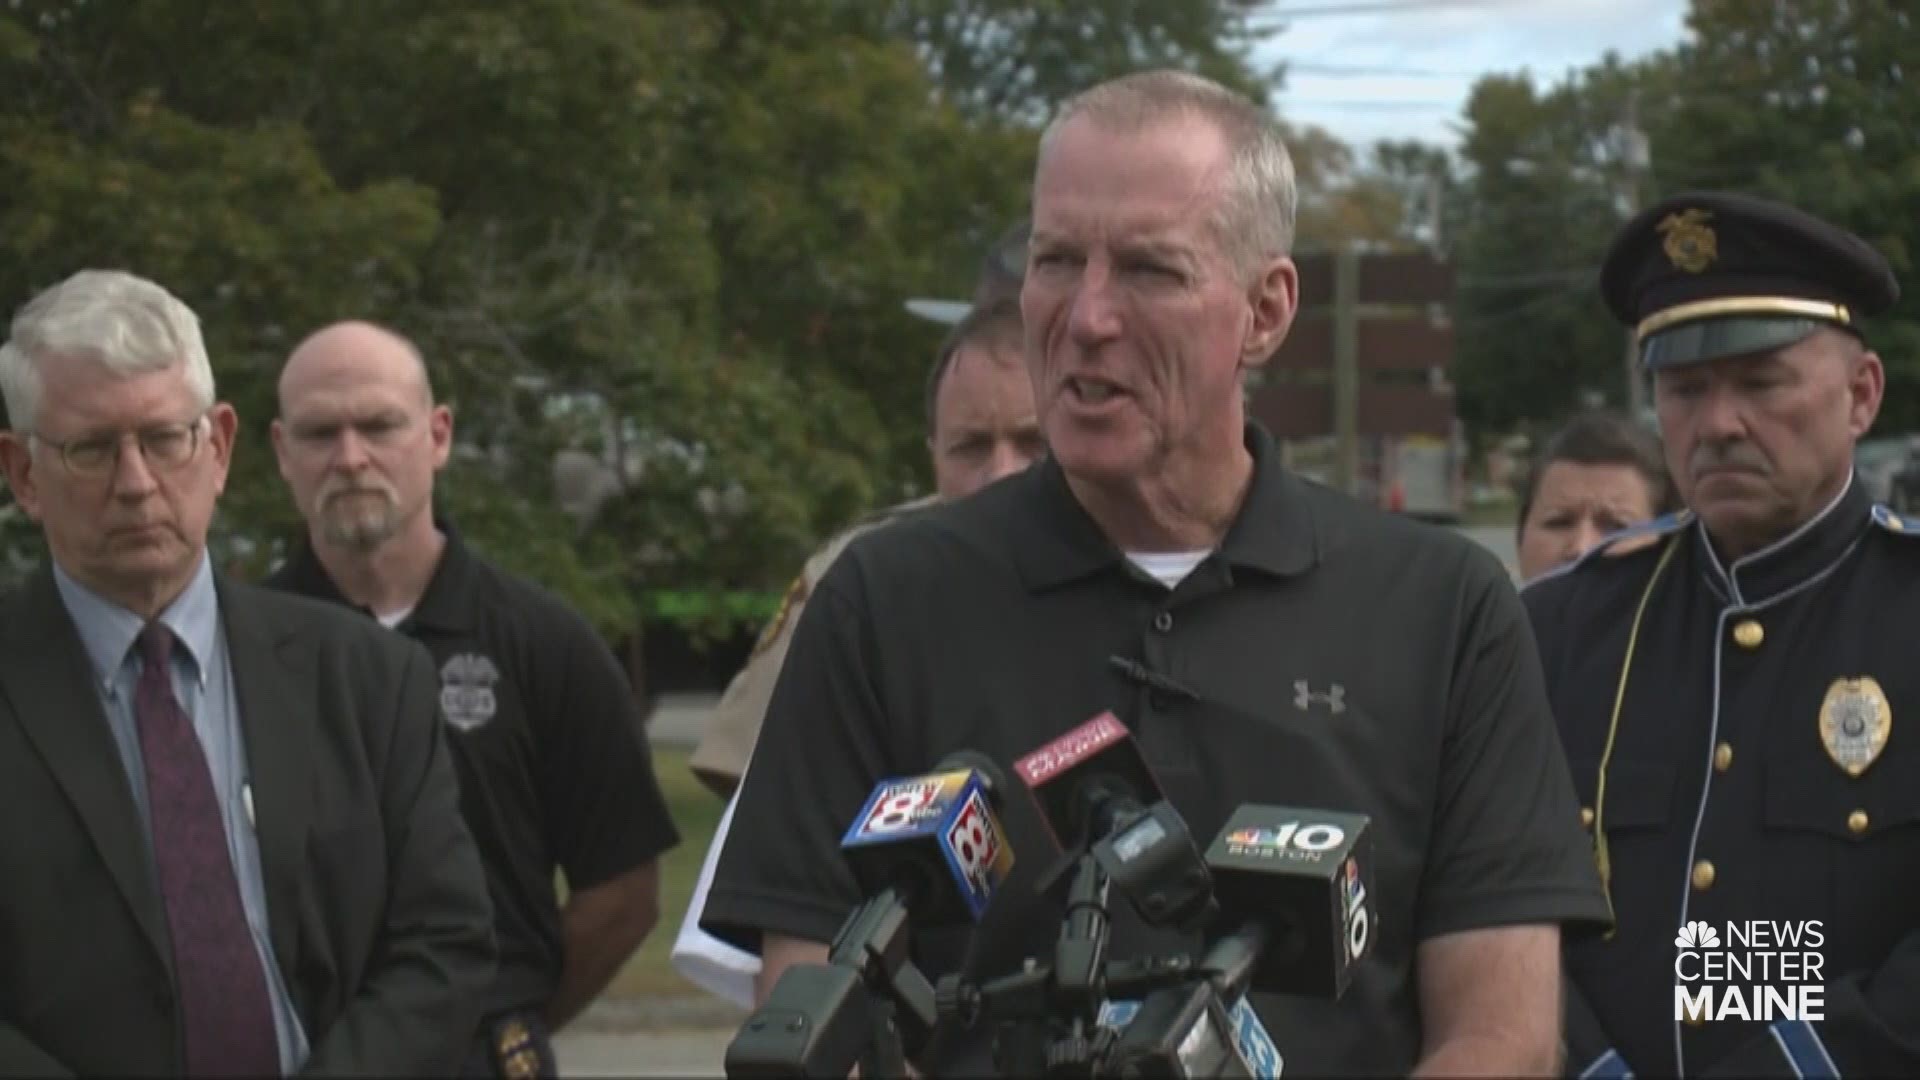 Farmington explosion news conference: State Fire Marshal Sgt. Ken Grimes